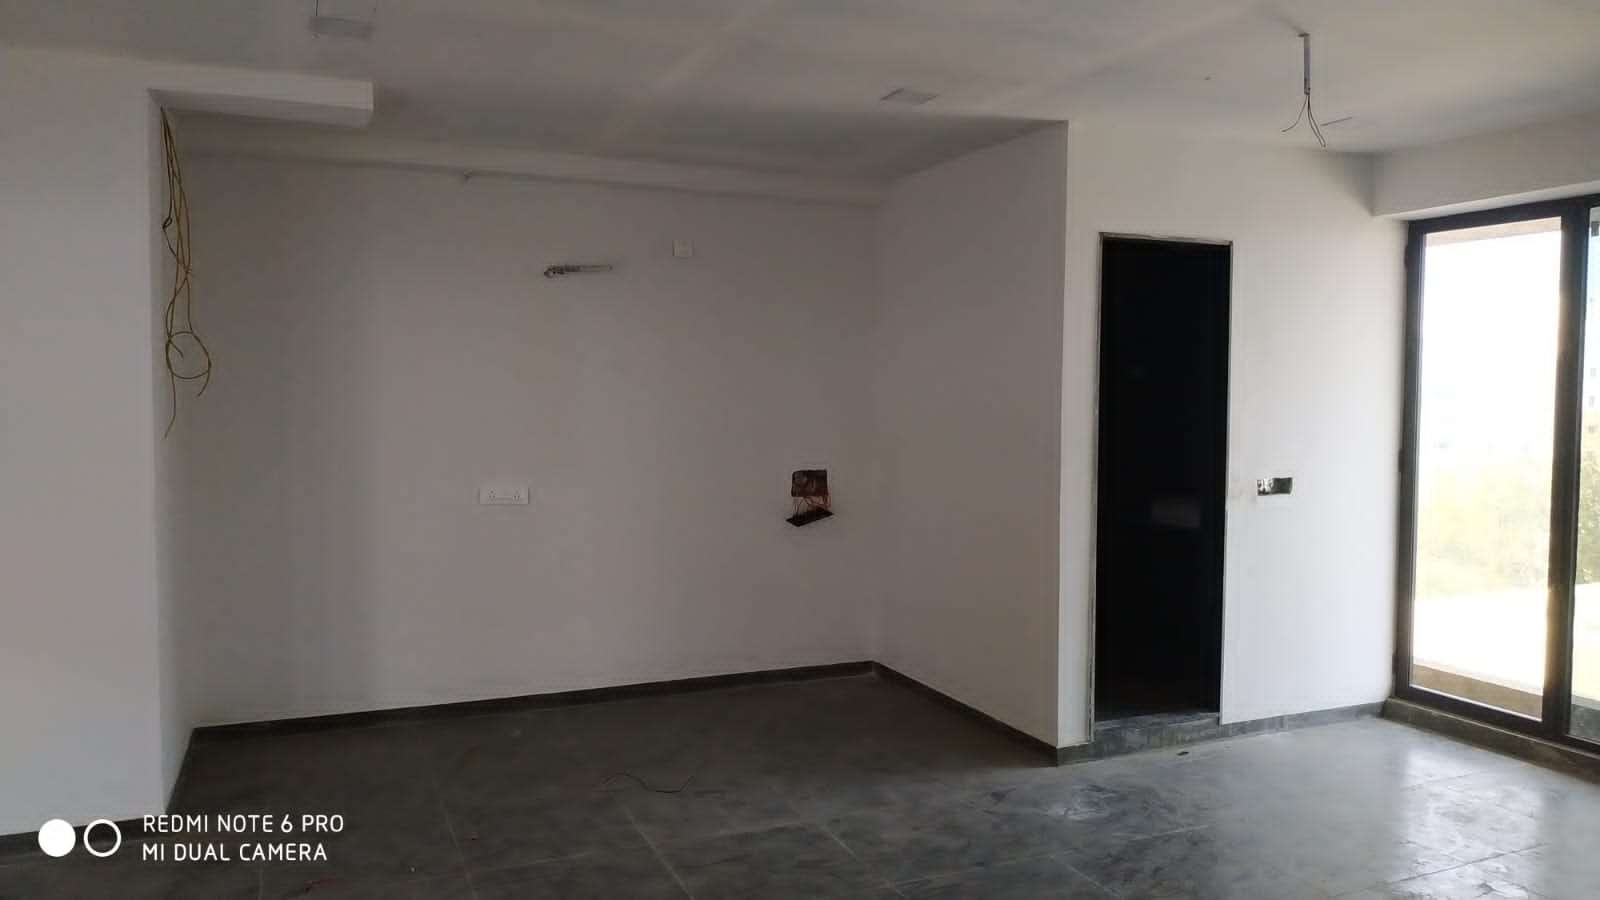 Office/ Shop, 600 sq ft carpet area, UnFurnished for rent